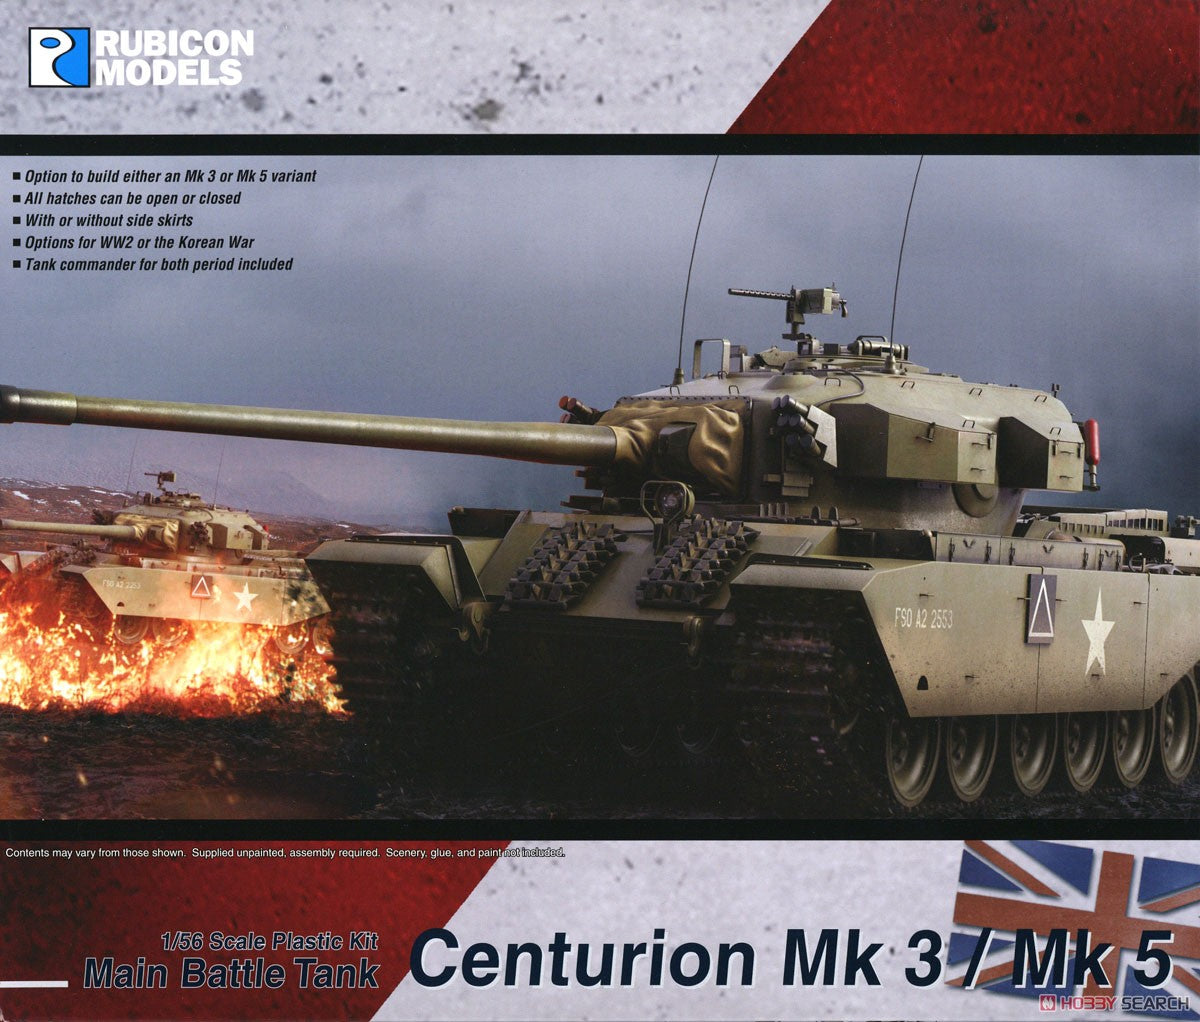 Rubicon models 1/56 Centurion MBT Mk 3 / Mk 5